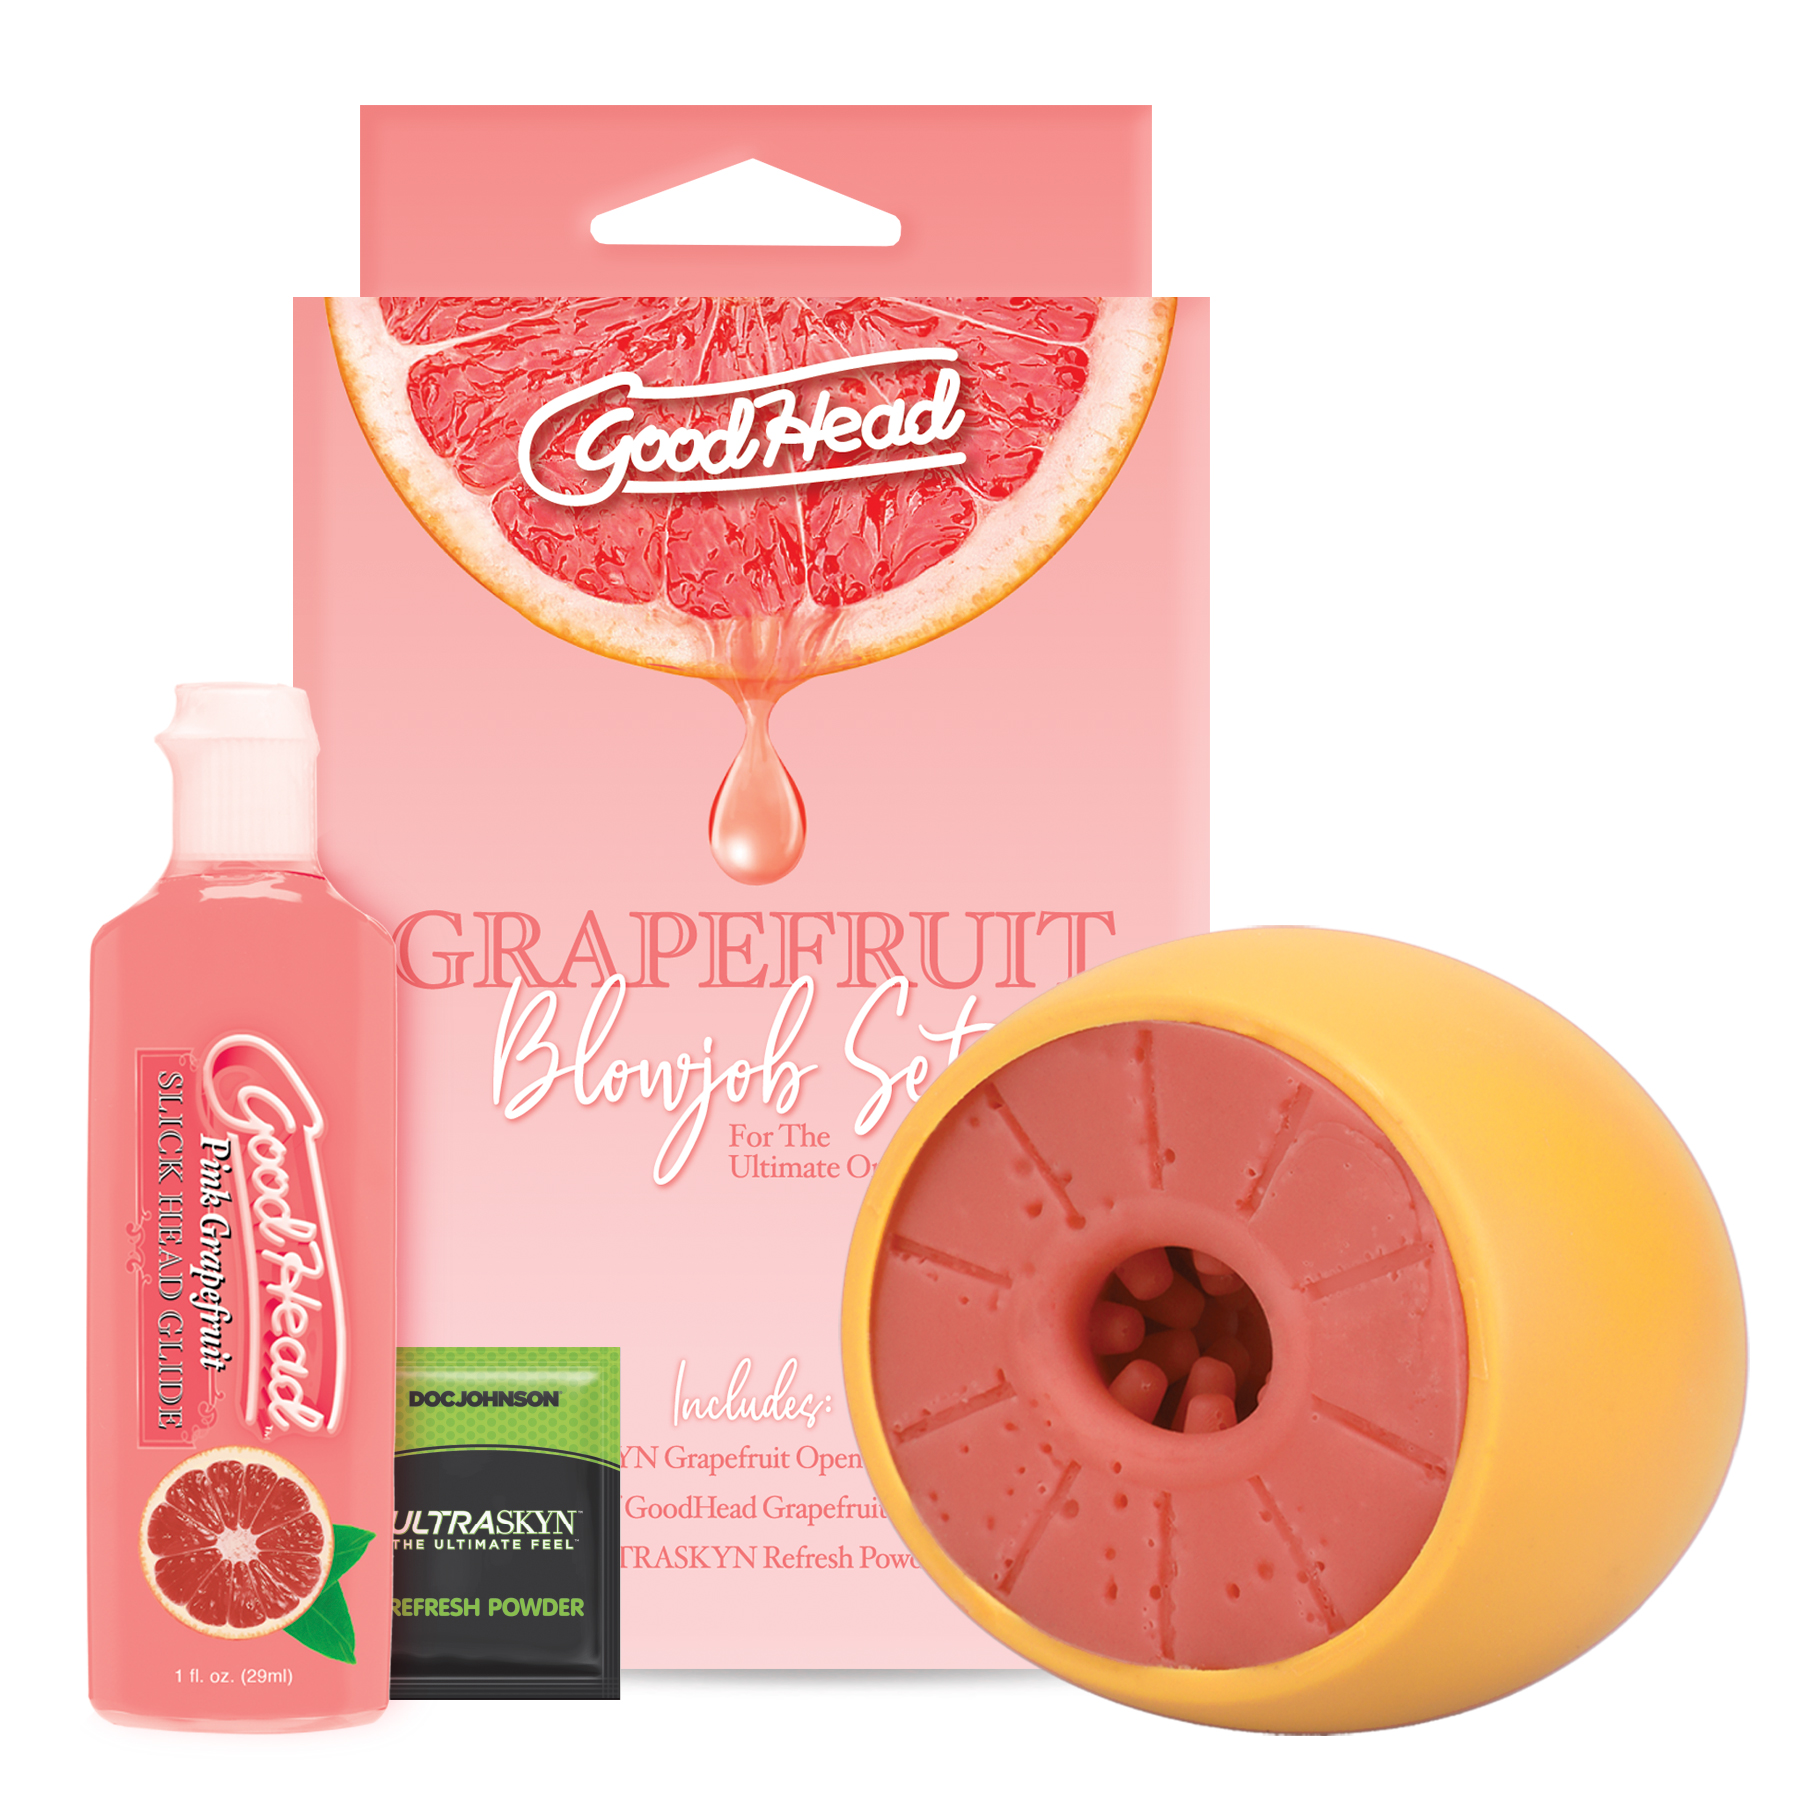 goodhead grapefruit blowjob set yellowpink 